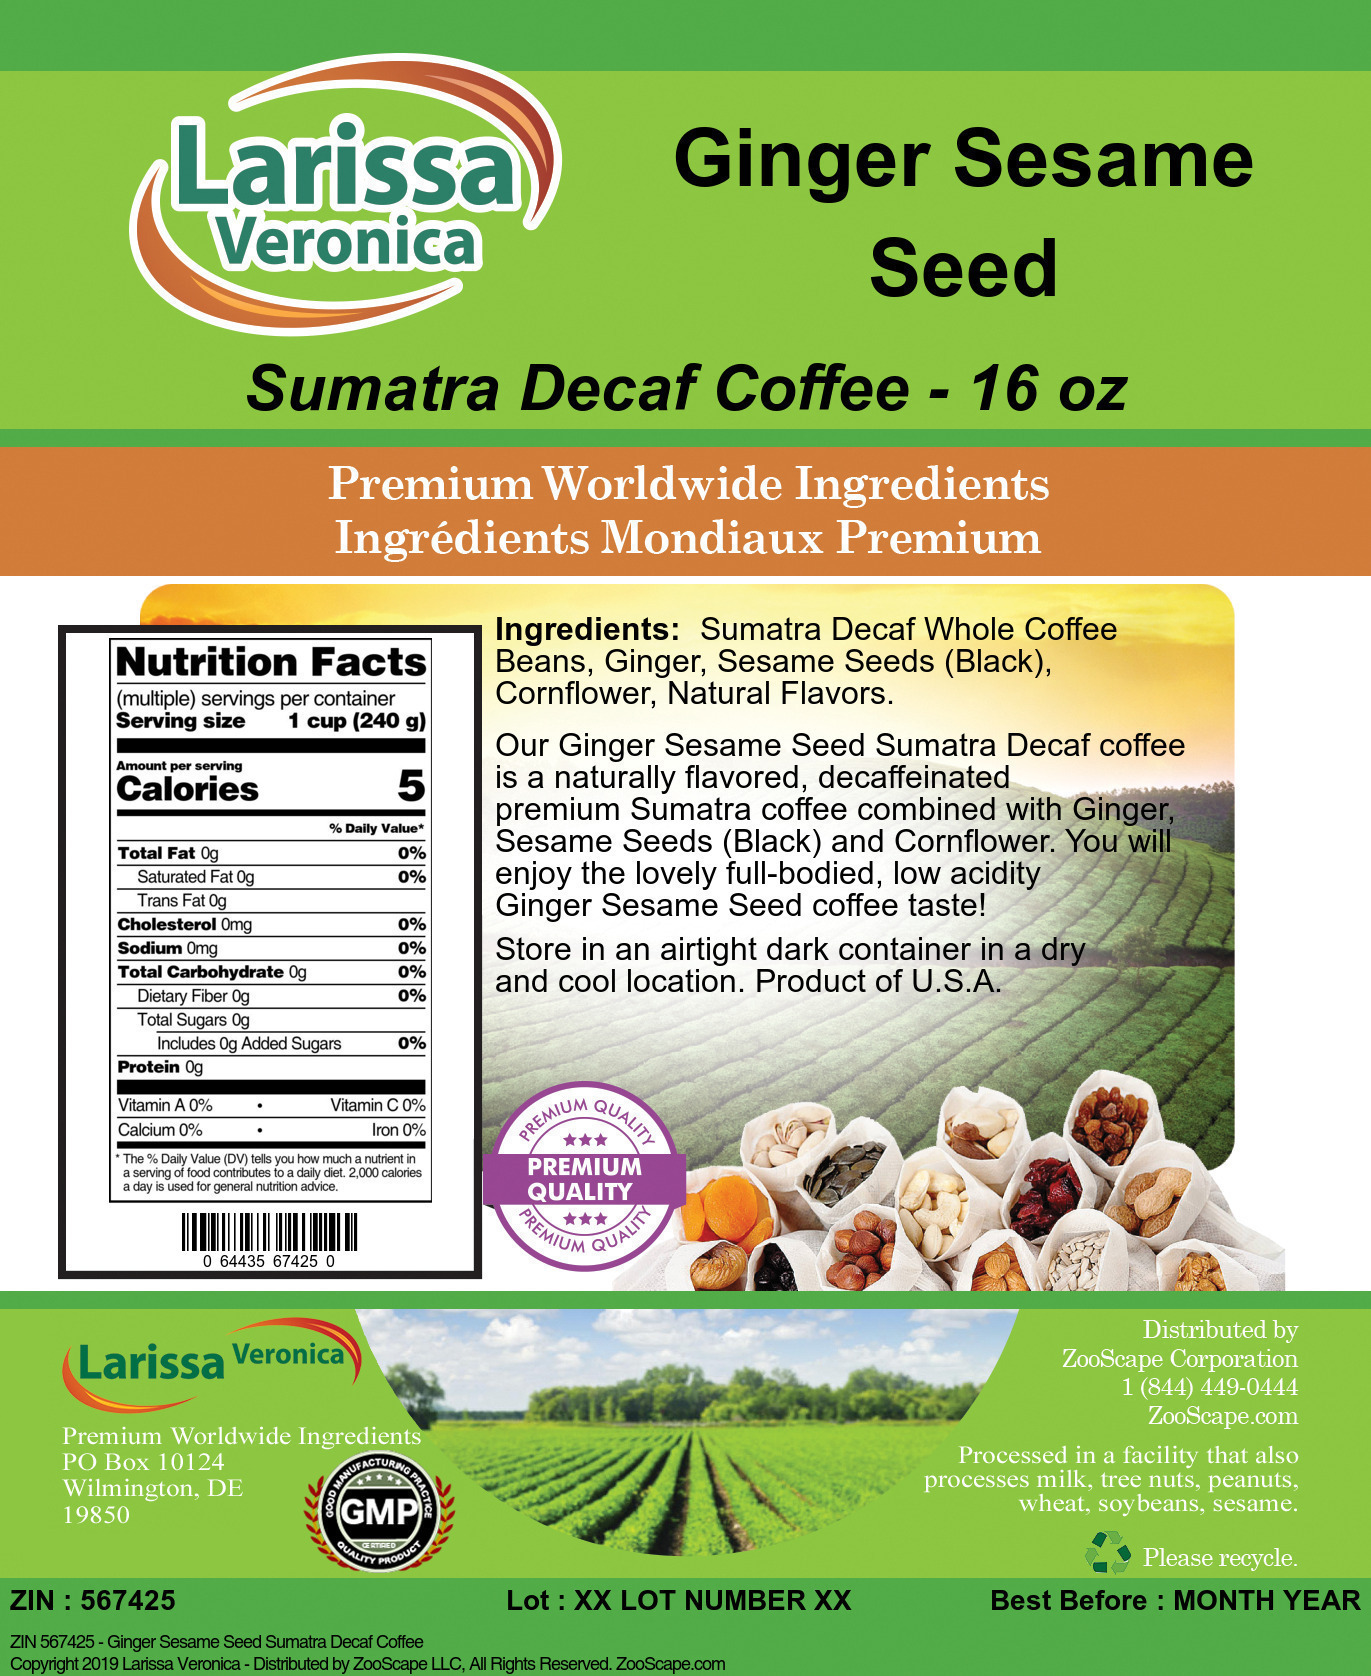 Ginger Sesame Seed Sumatra Decaf Coffee - Label